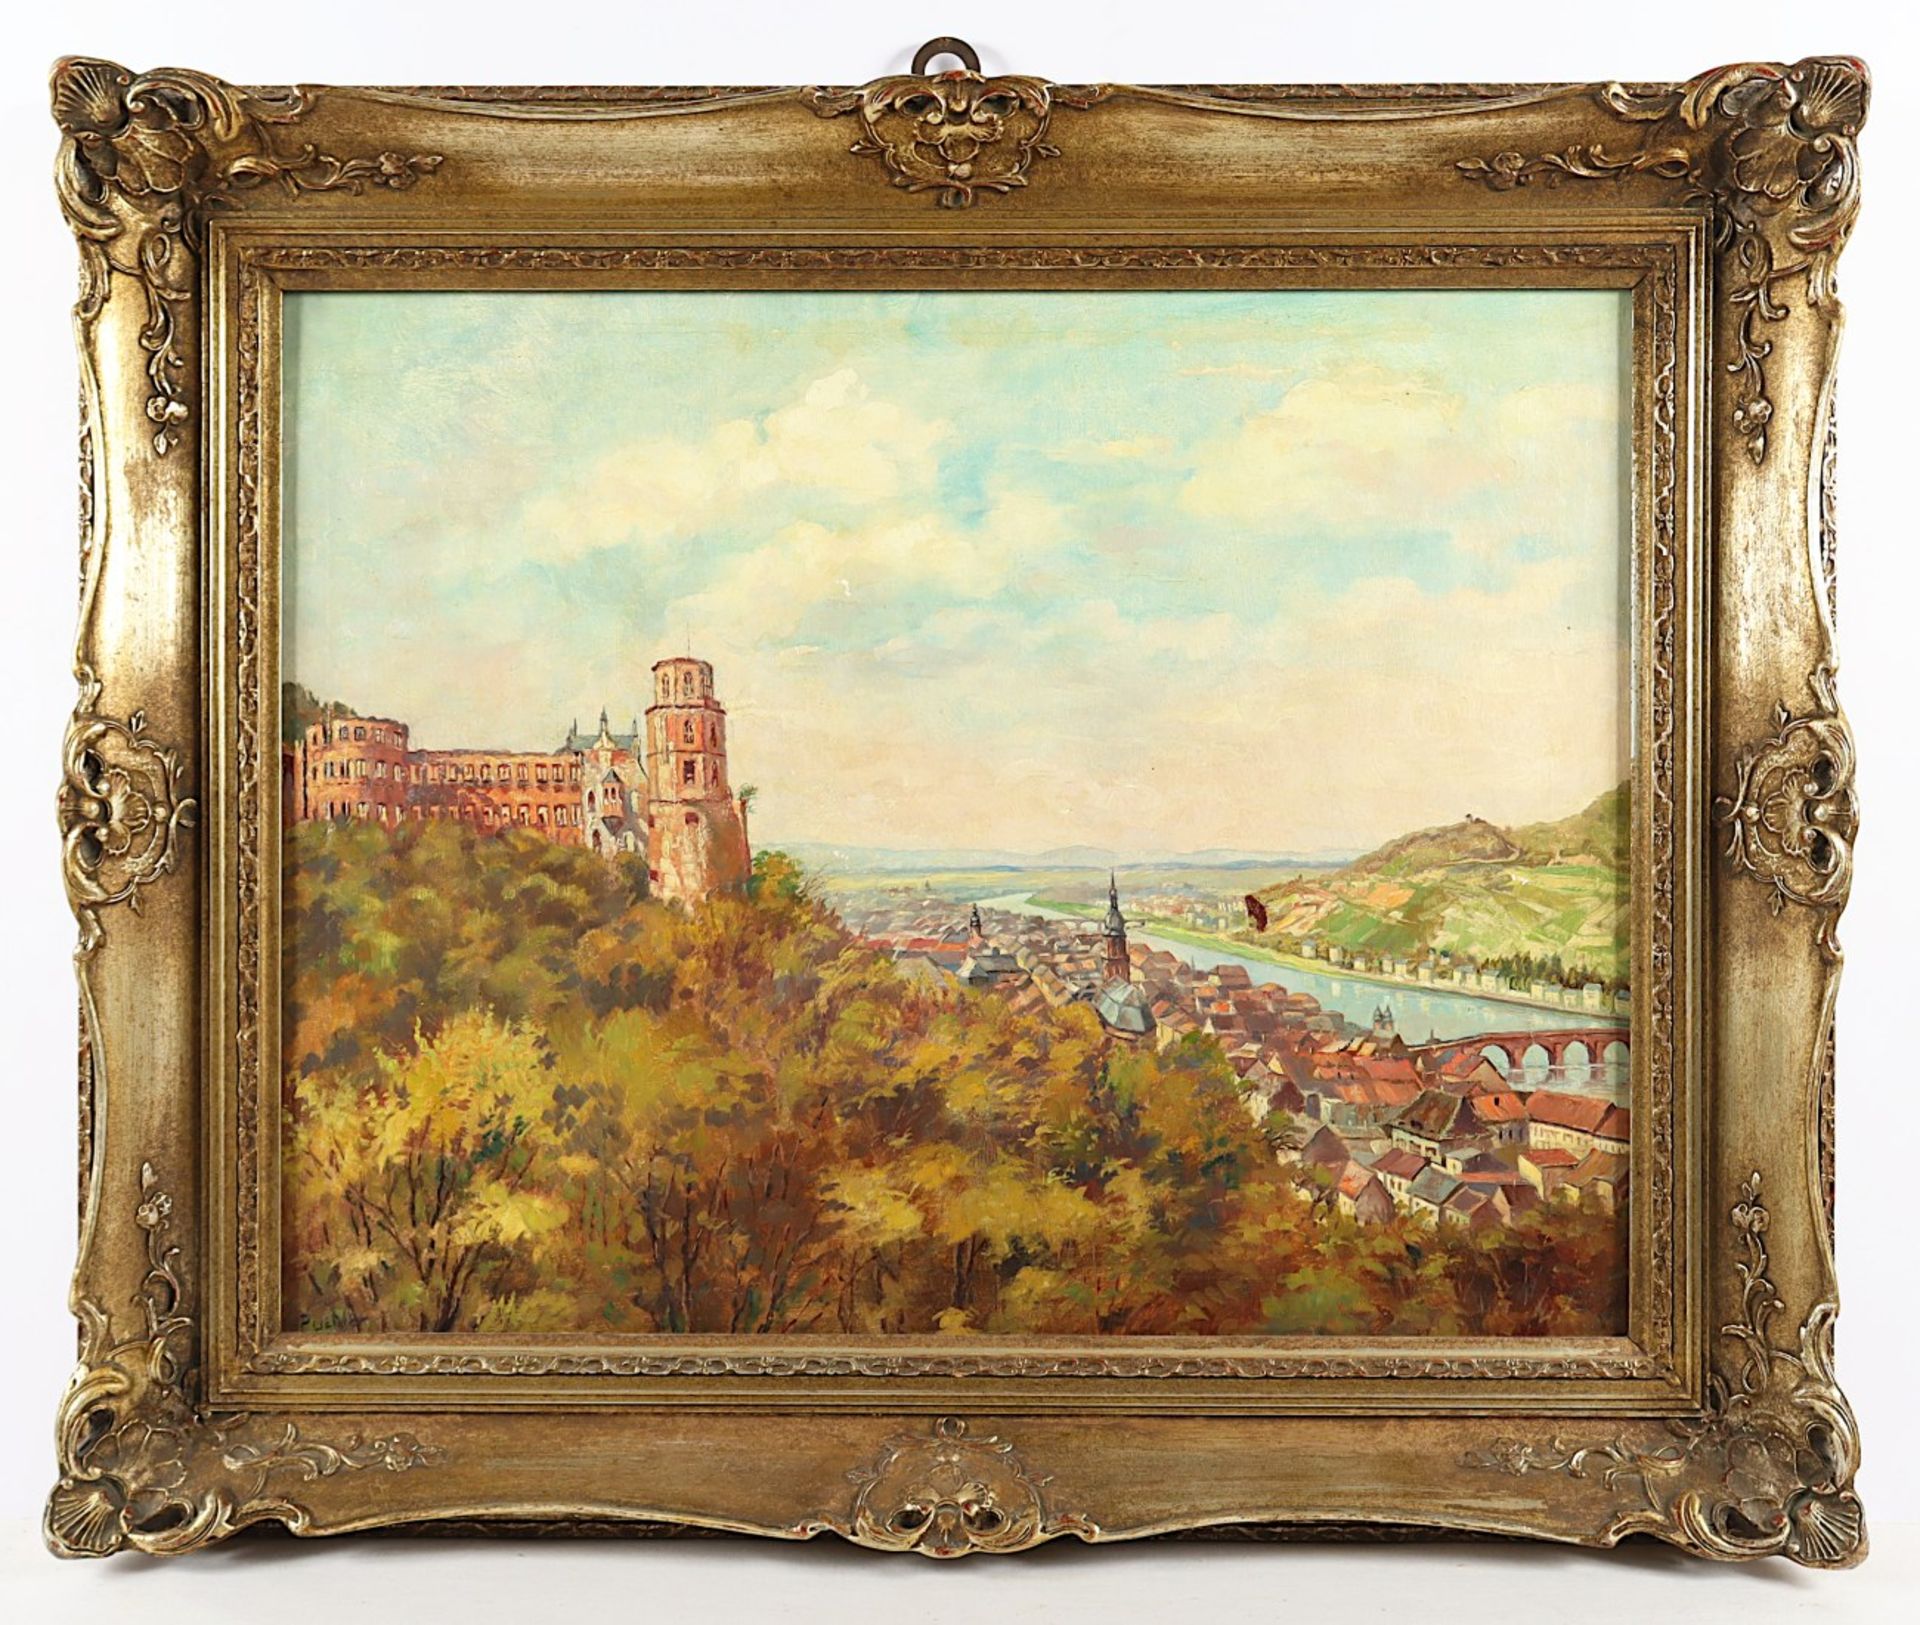 PÜTTER, Gisela (1881-1959), "Blick auf Heidelberg", Öl/Lwd., 55 x 71, besch./rest., unten links sig